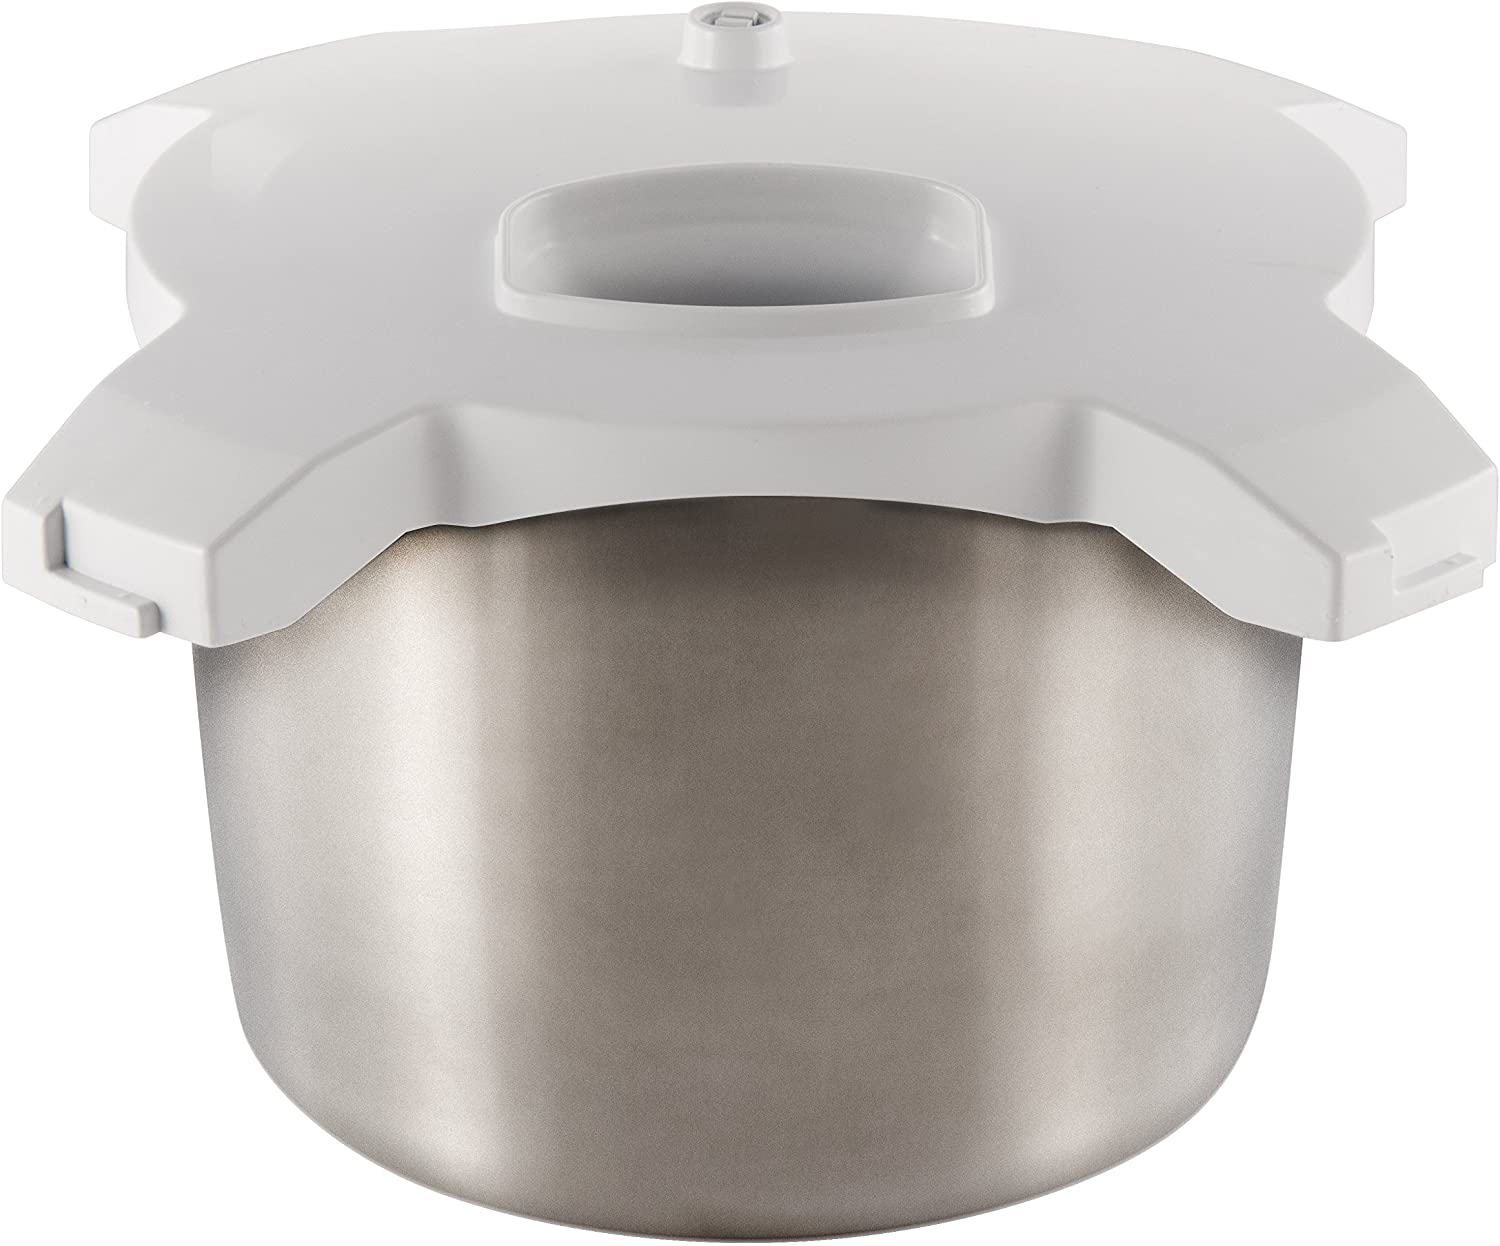 Bosch Universal Stainless Steel Bowl